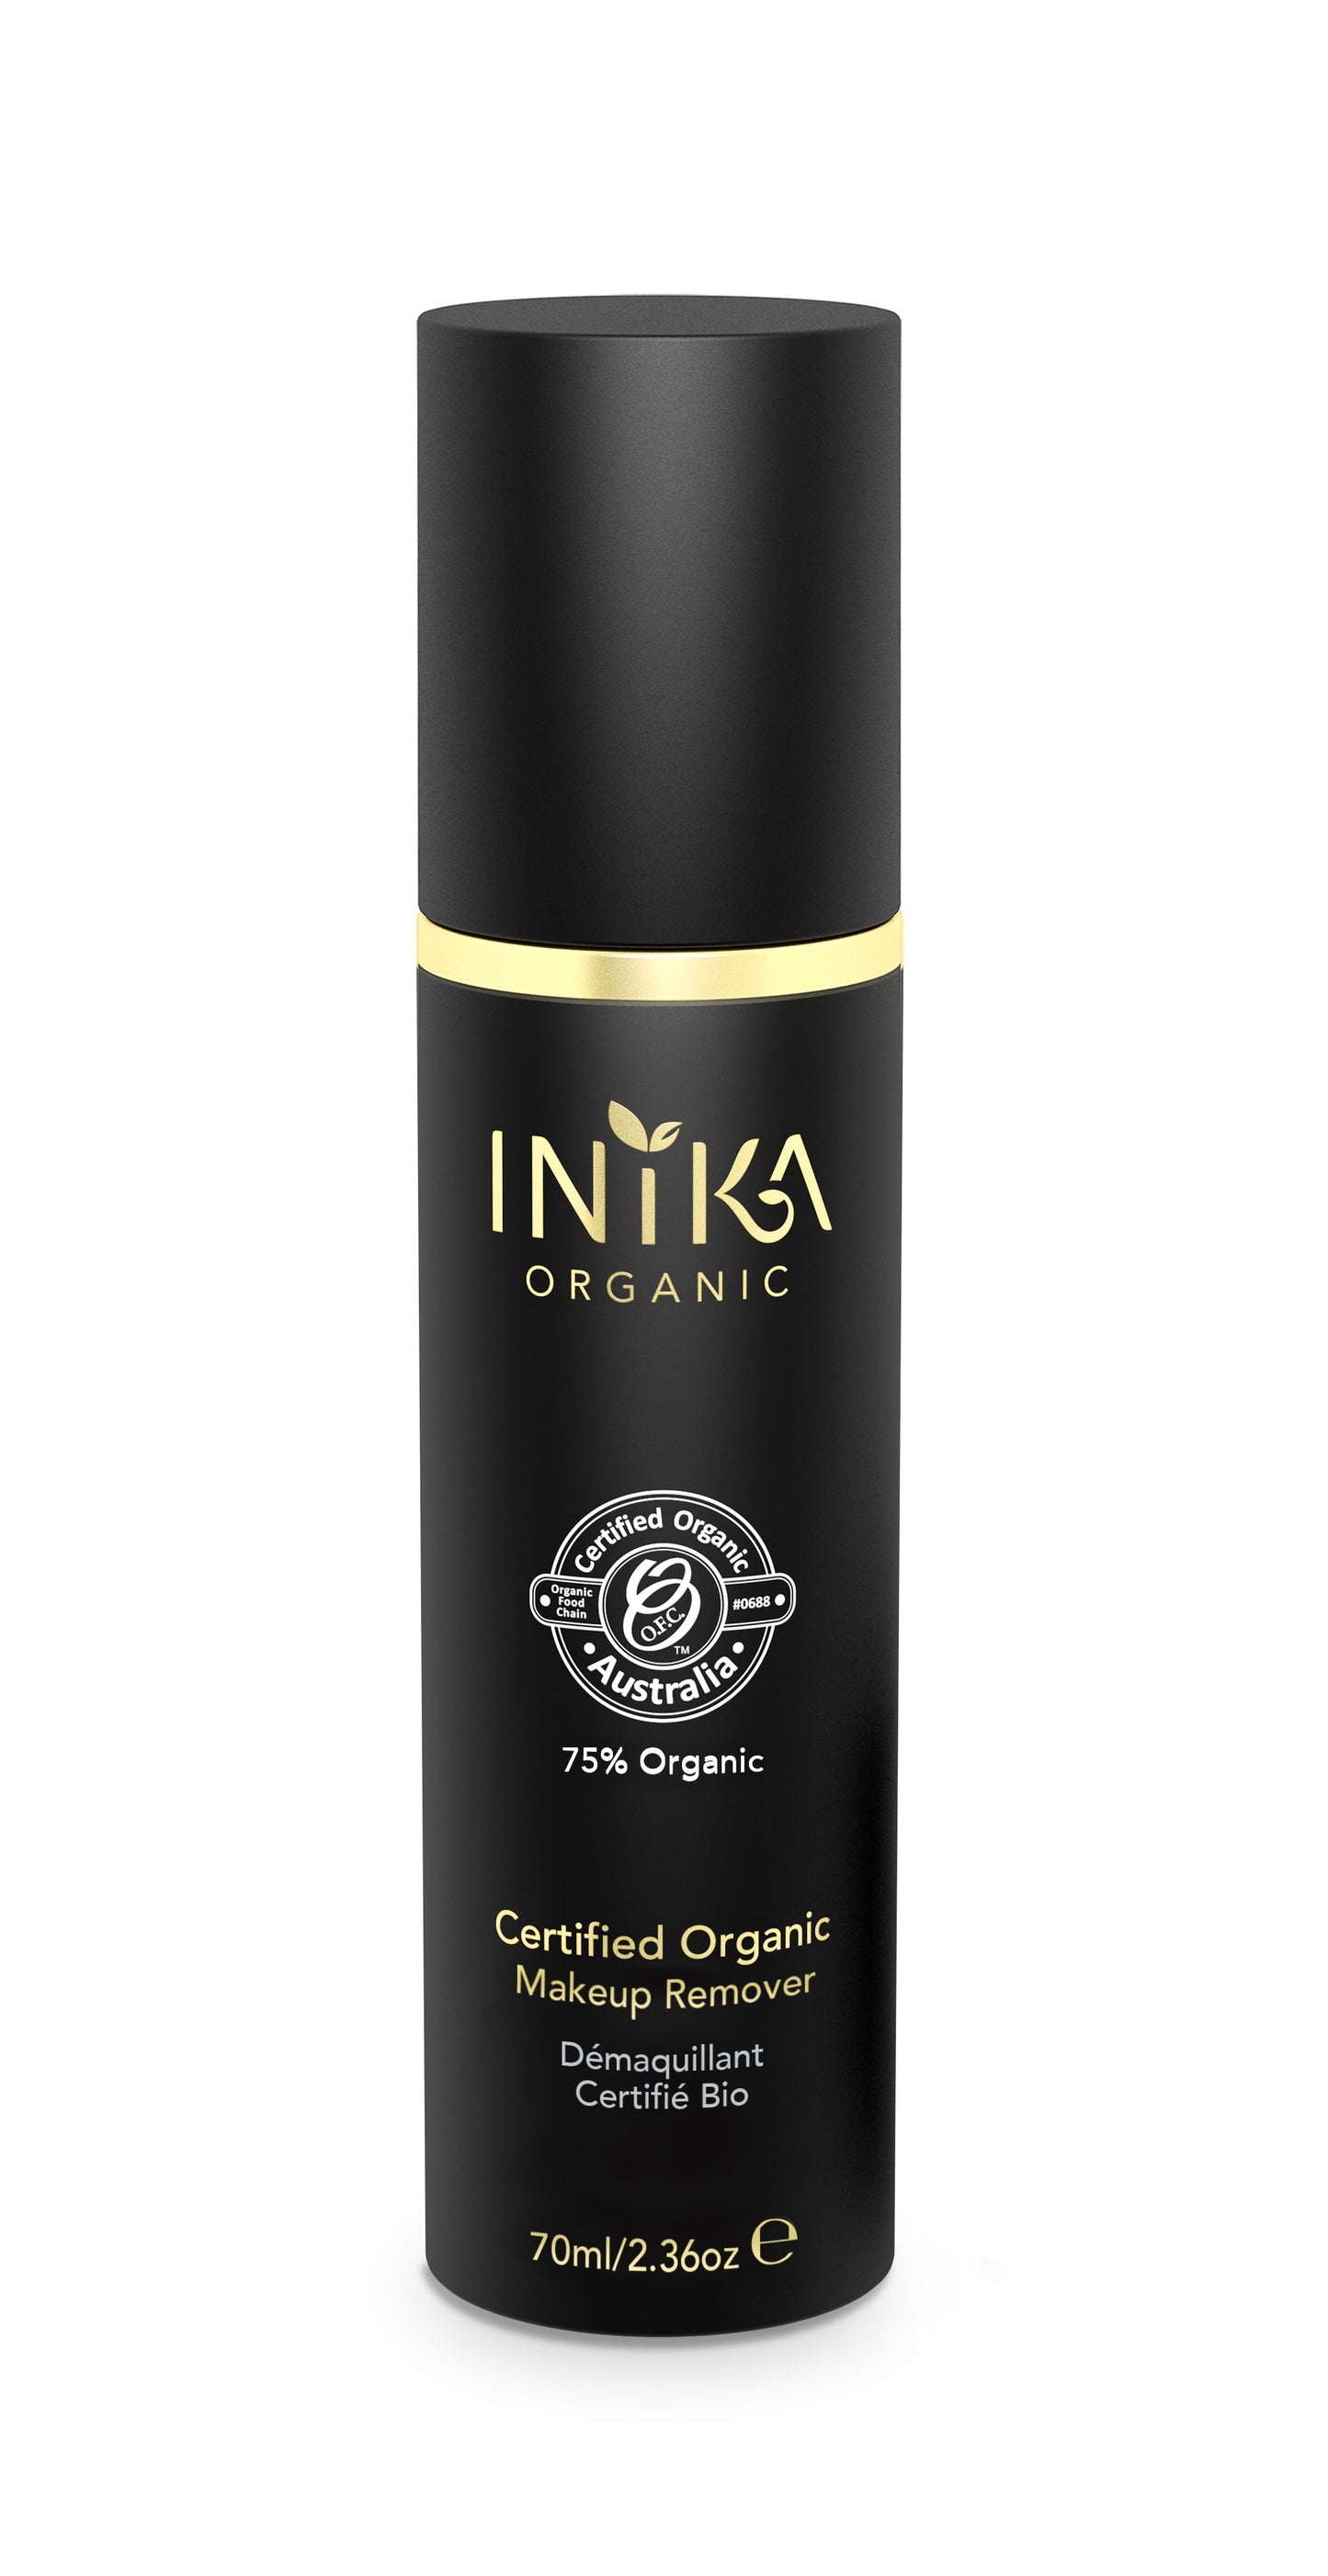 INIKA Certified Organic Makeup Remover 70ml